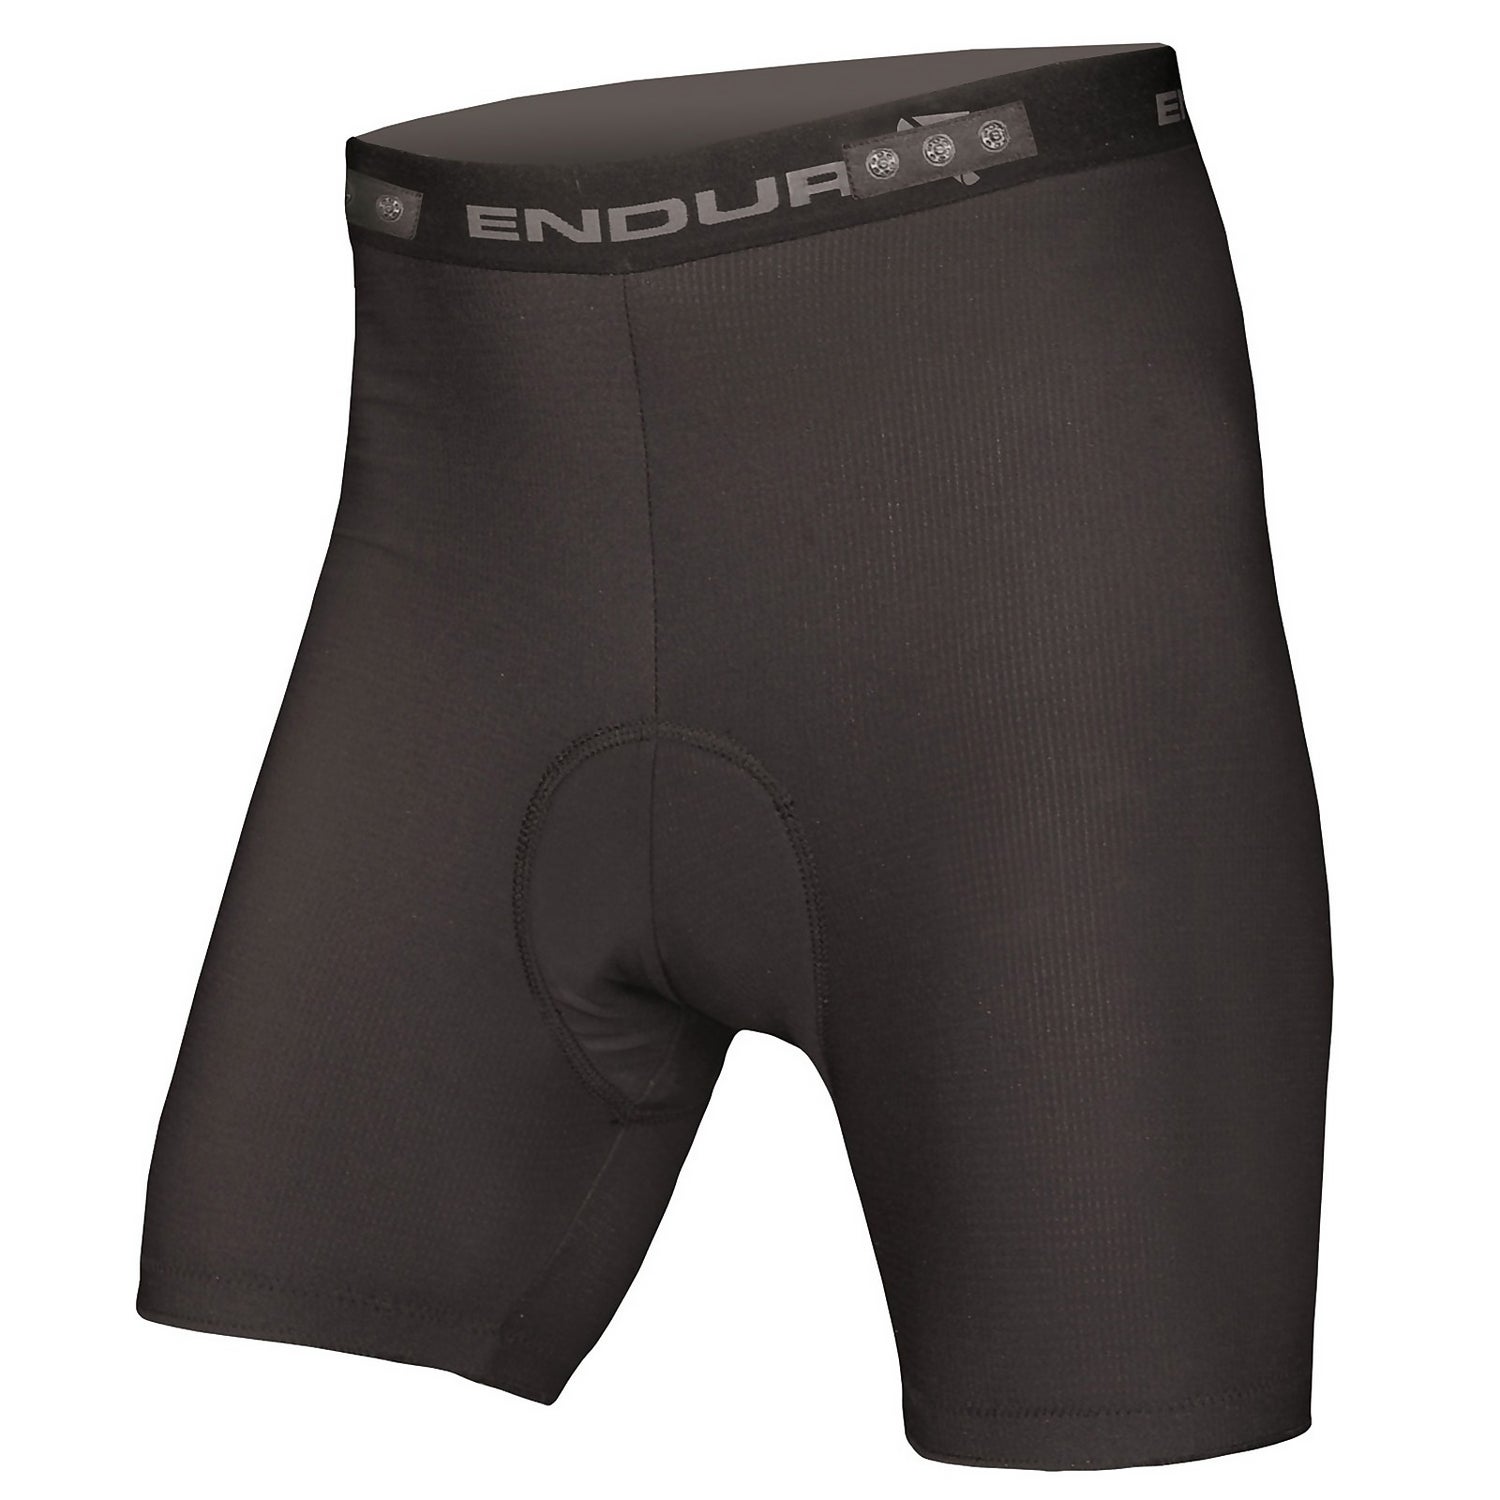 Men's Cycling Underwear - Support Bike Liner Short by Aero Tech